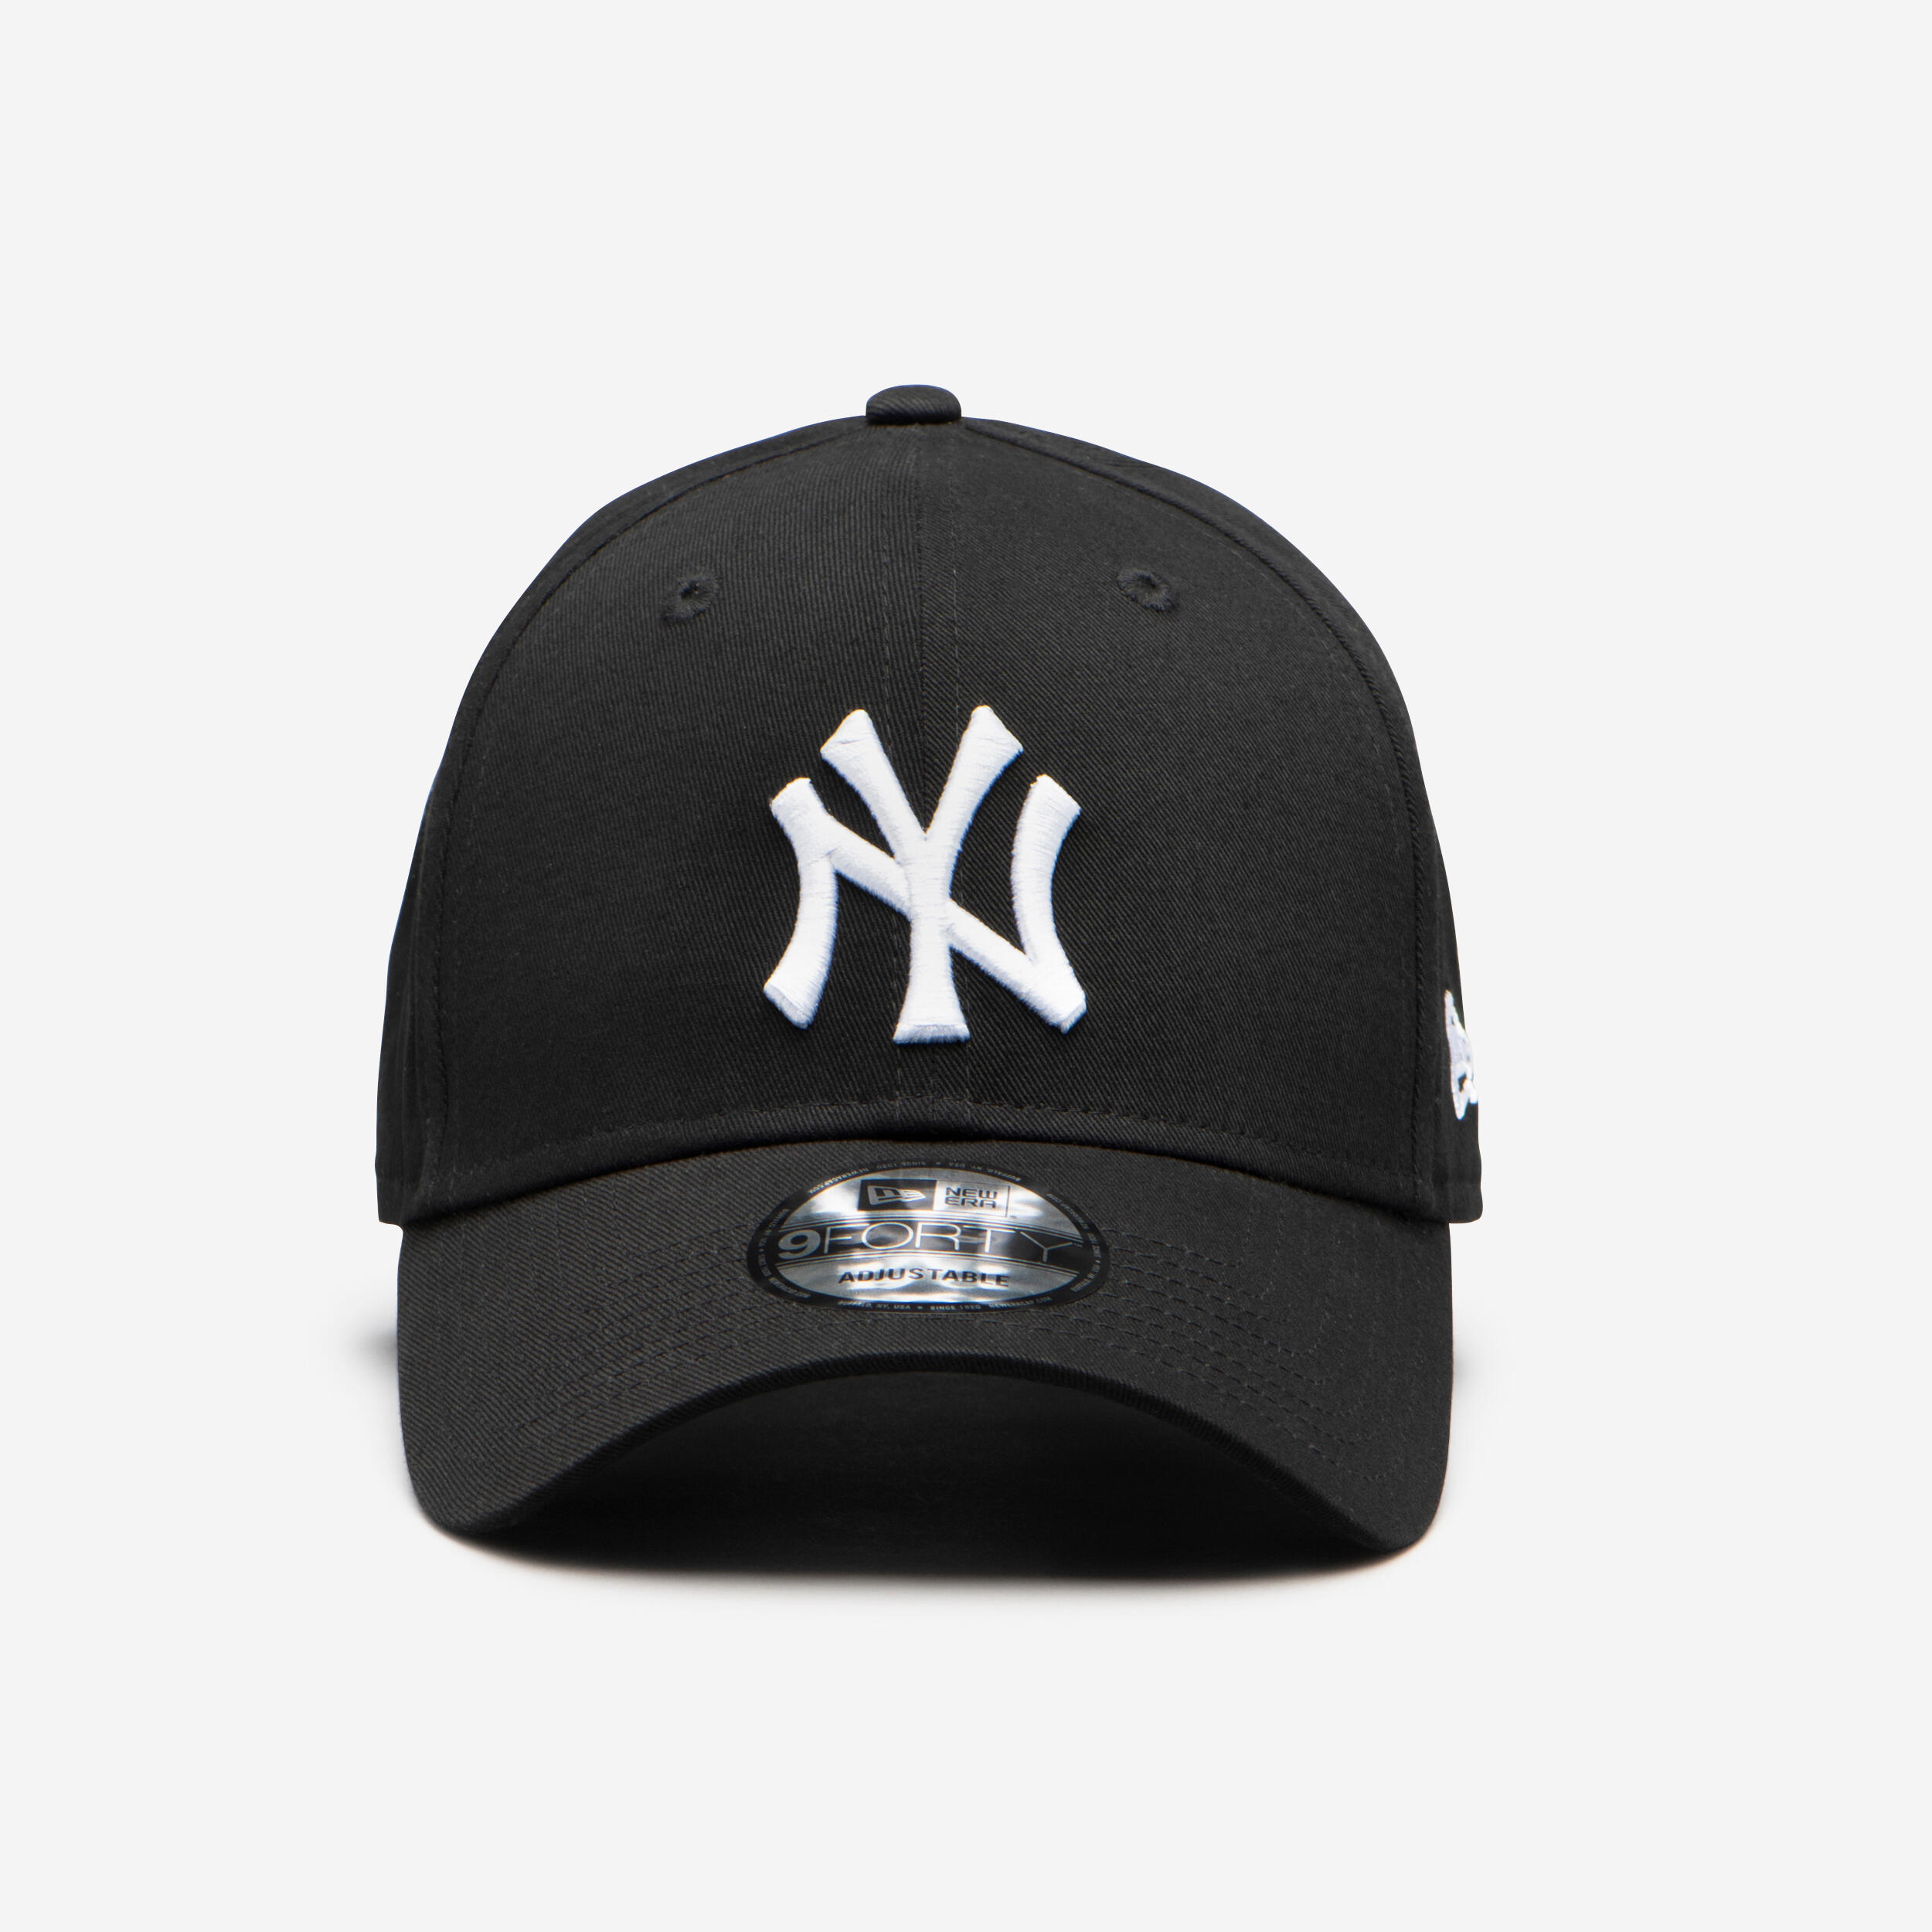 New Era 9Forty New York Yankees Snapback Cap Kappe schwarz weiss 95074